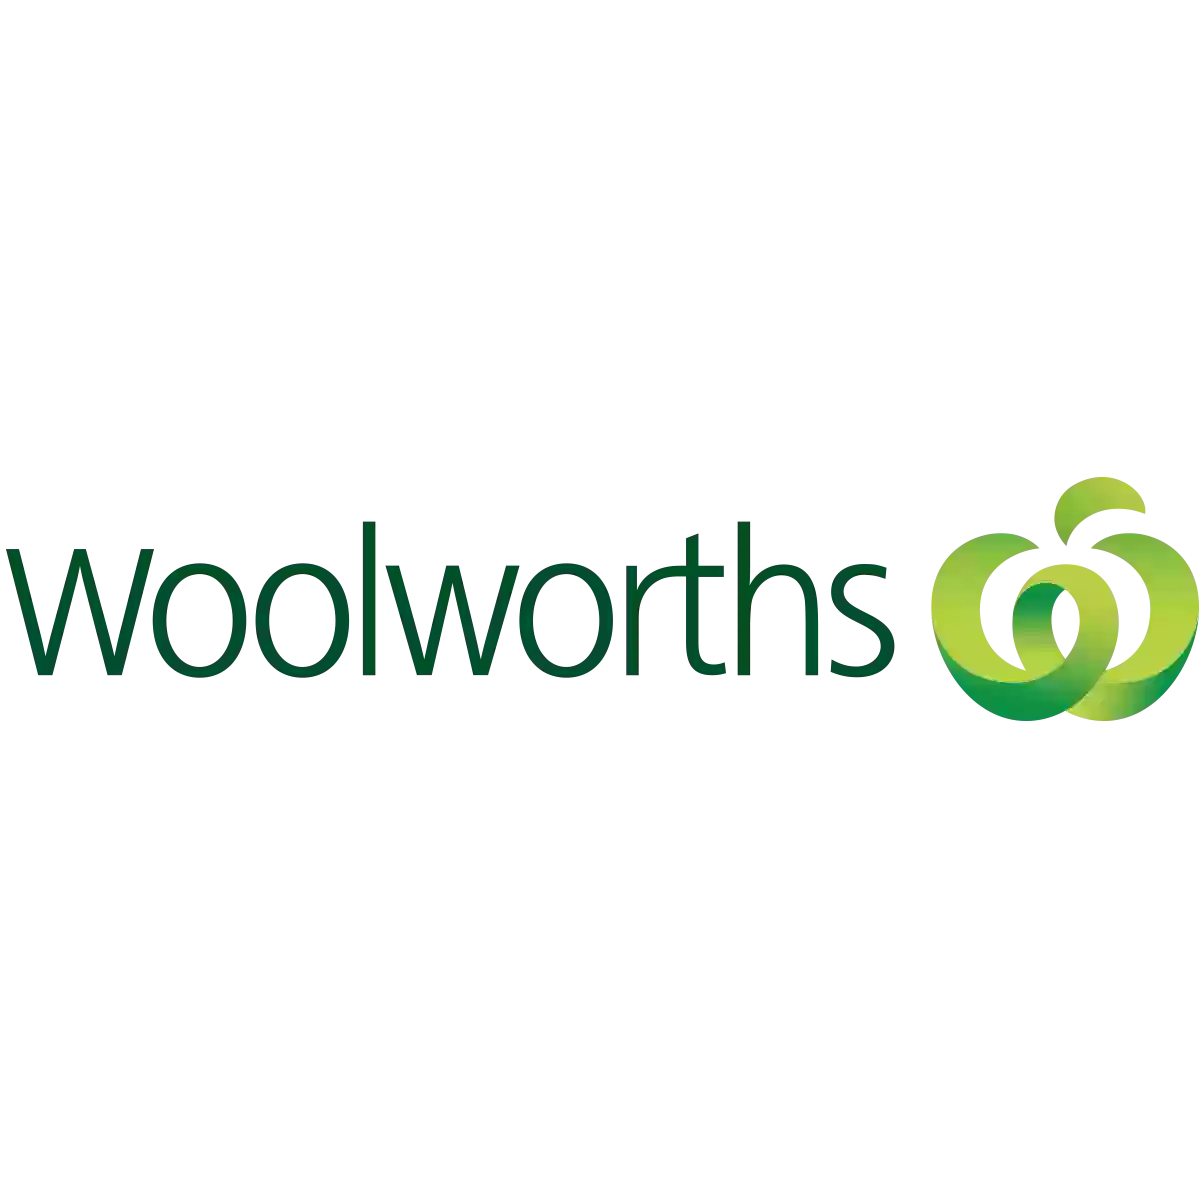 Woolworths Wellard